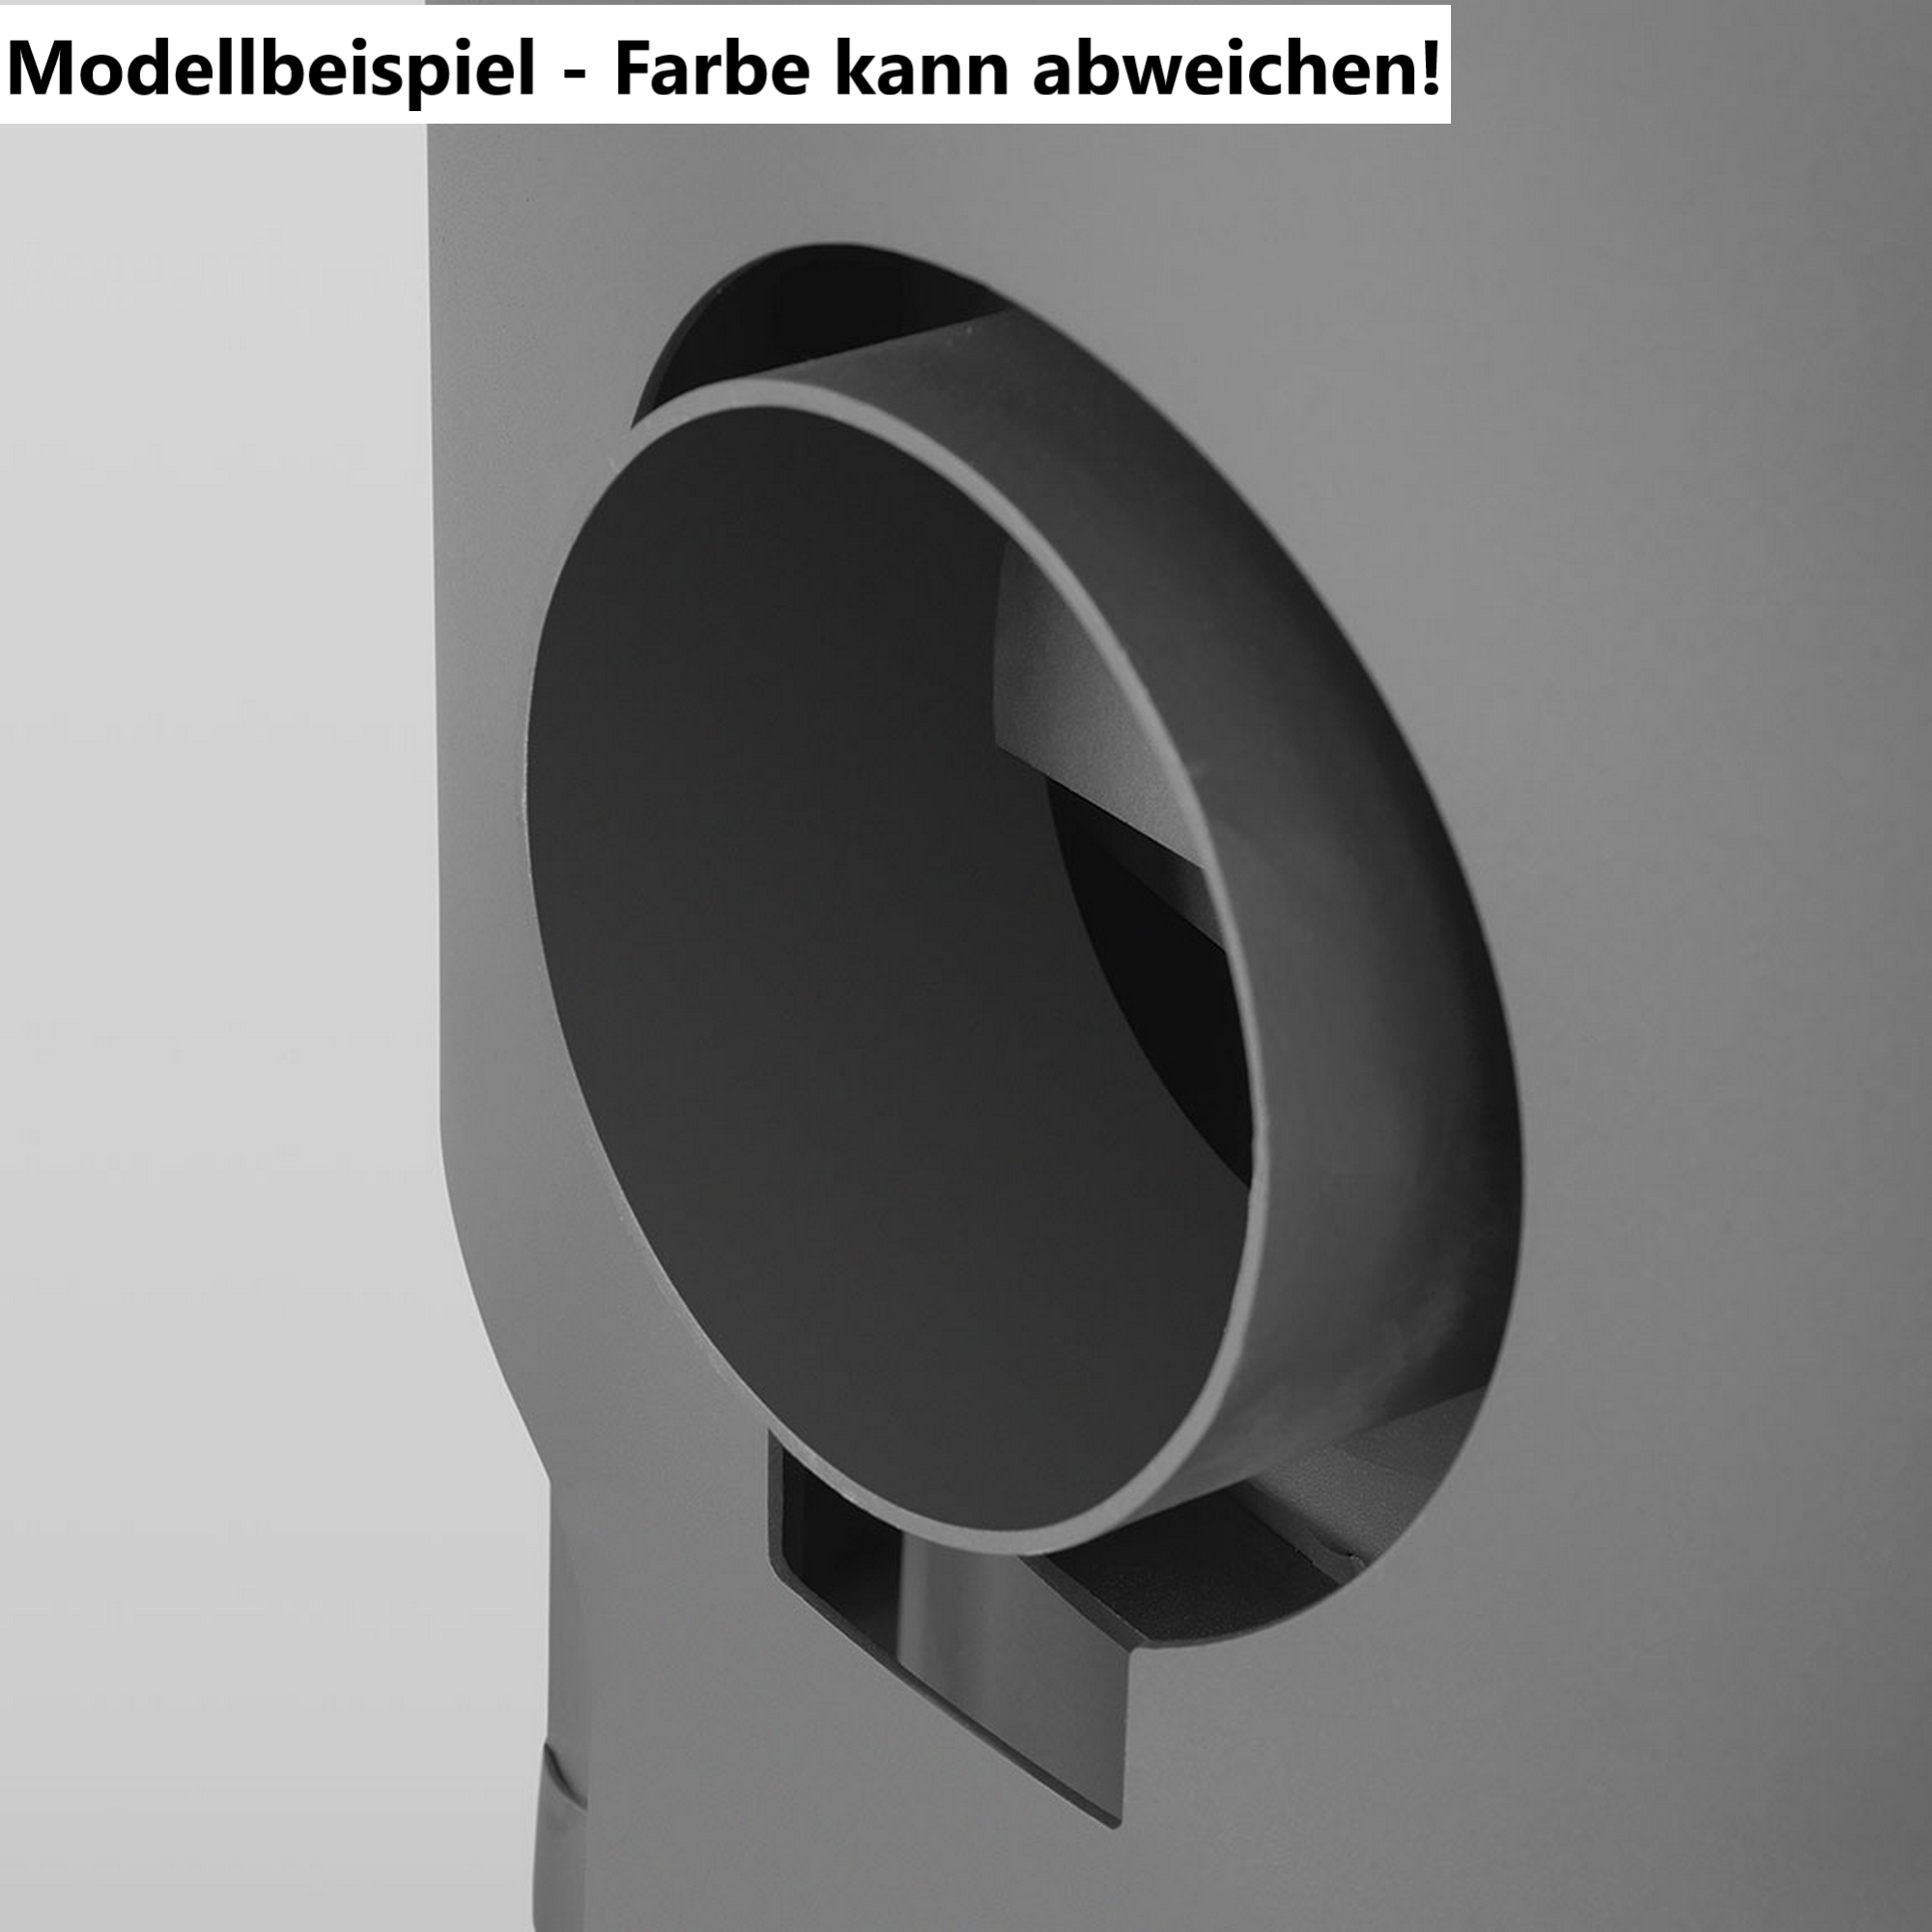 Kaminofen 'Meva' Stahl 5,5 kW + product picture